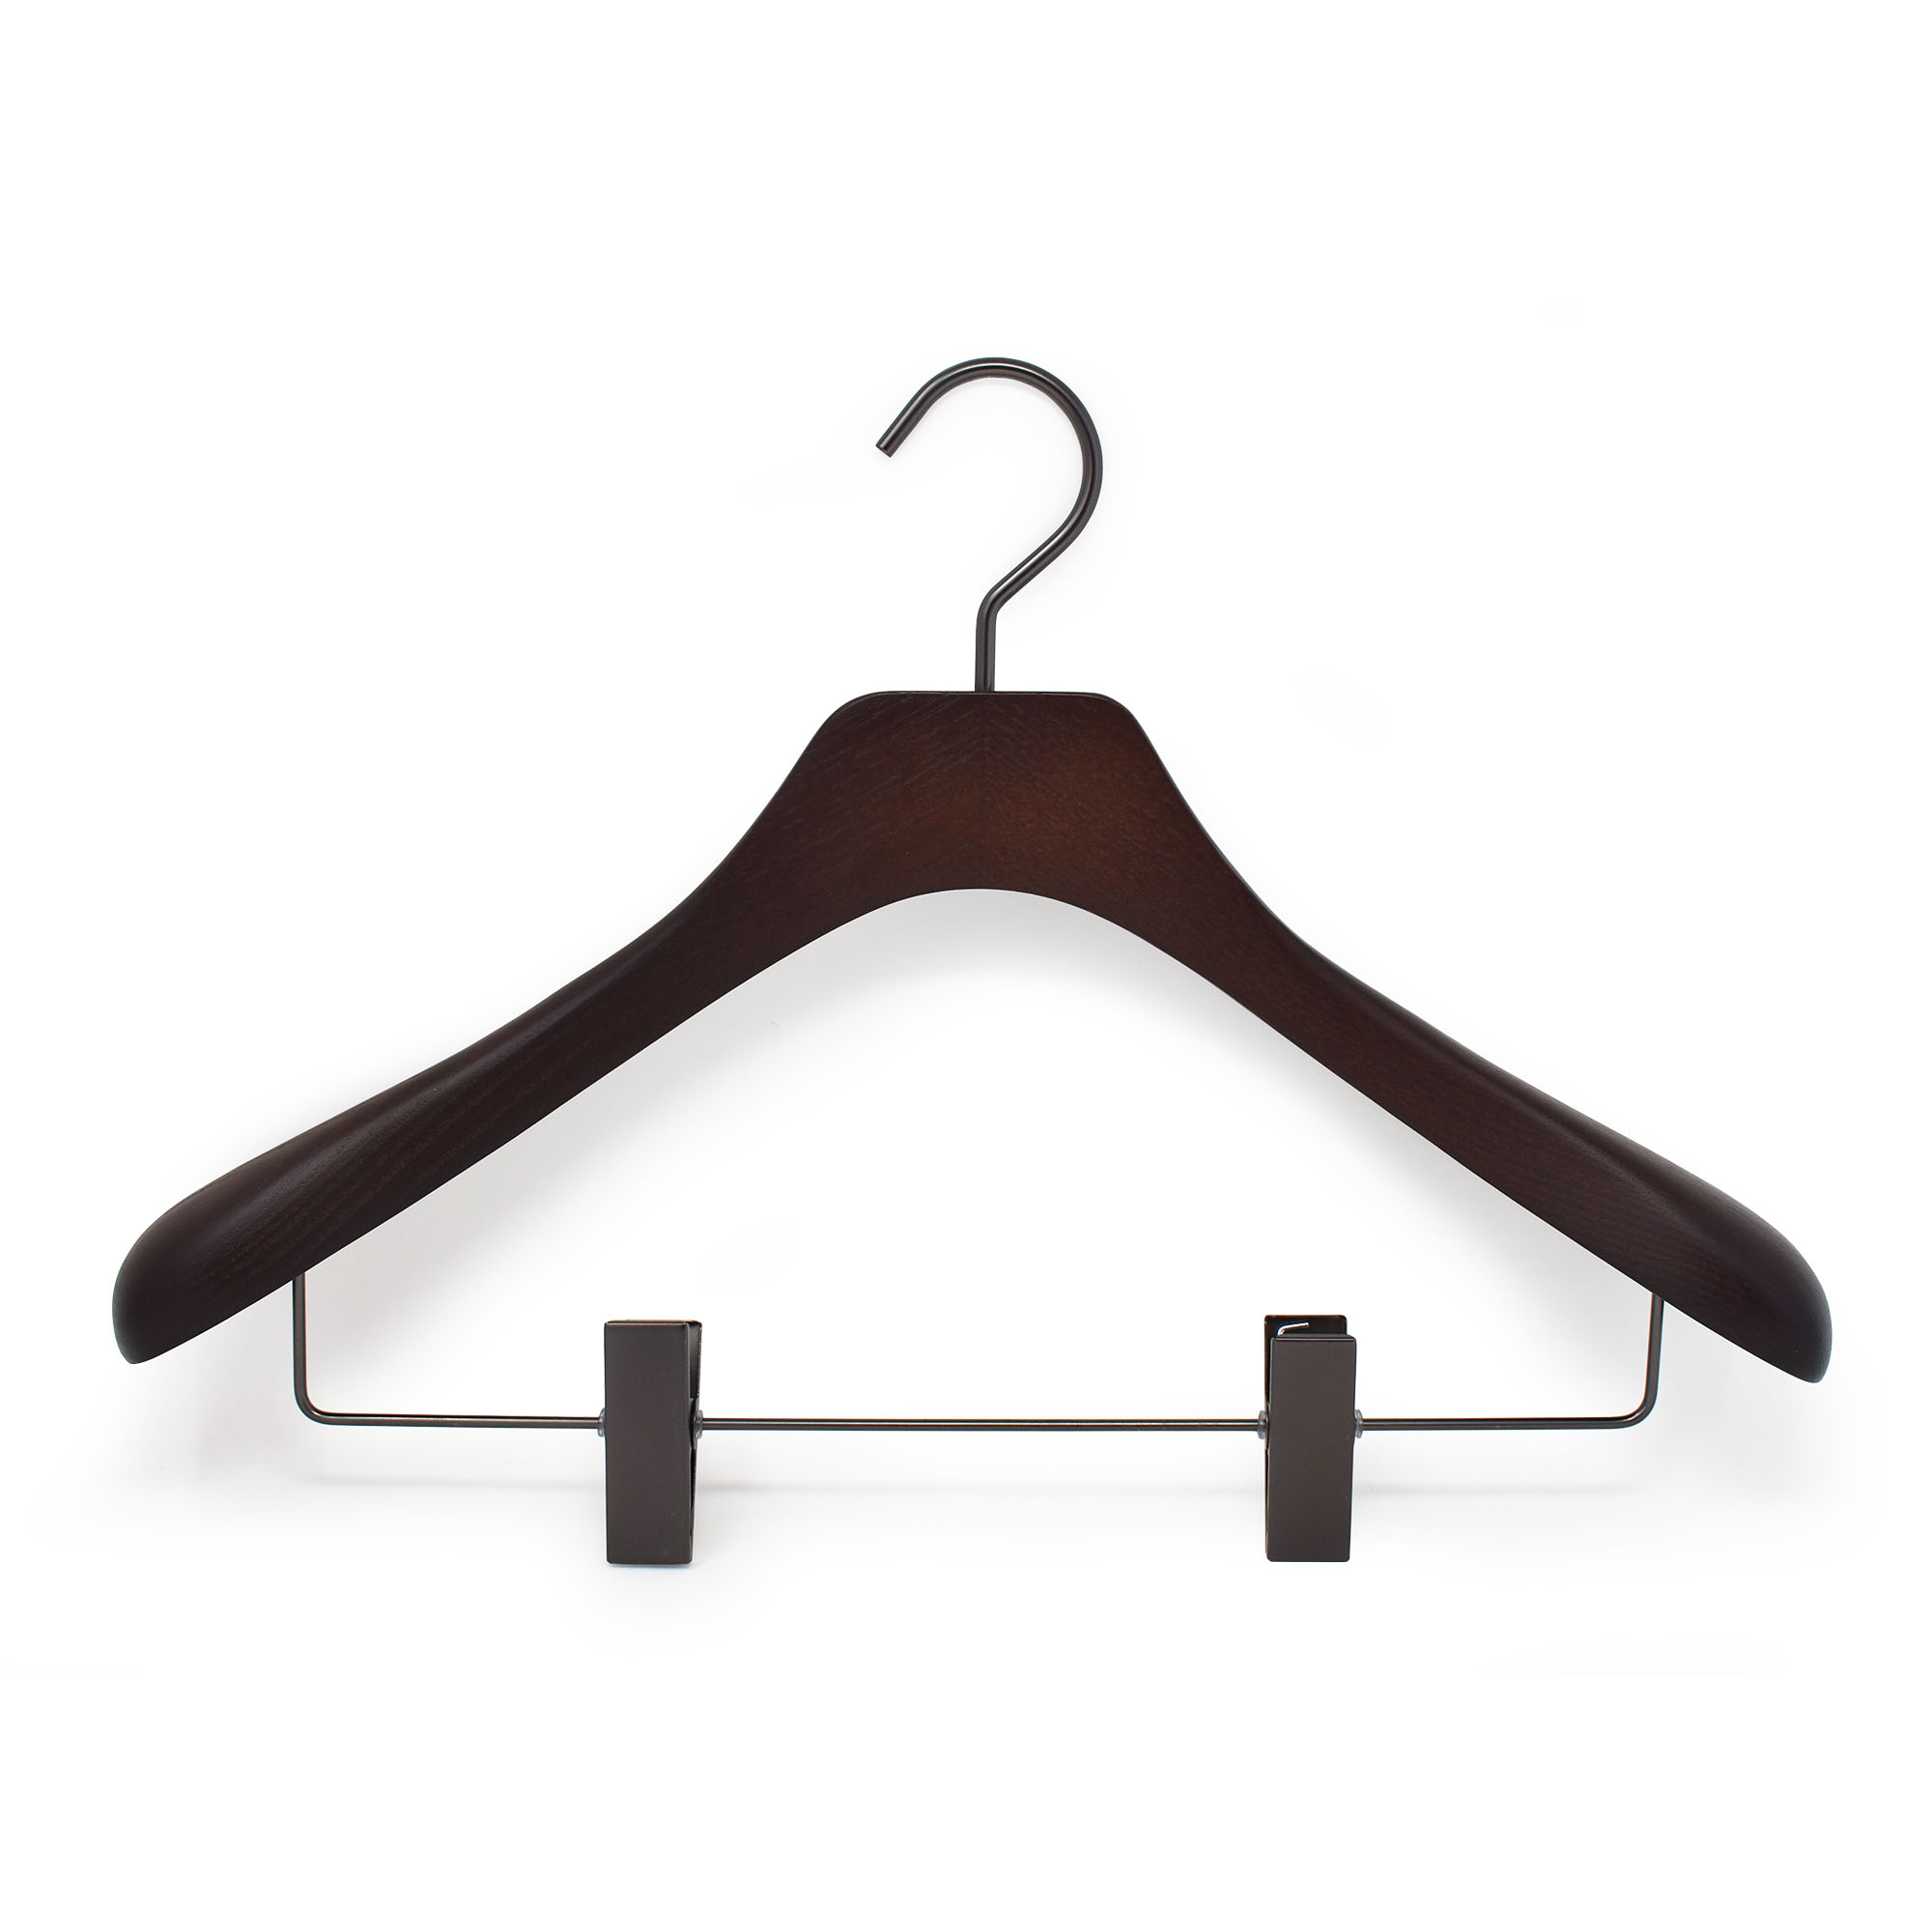 wooden hanger for jacket and coat